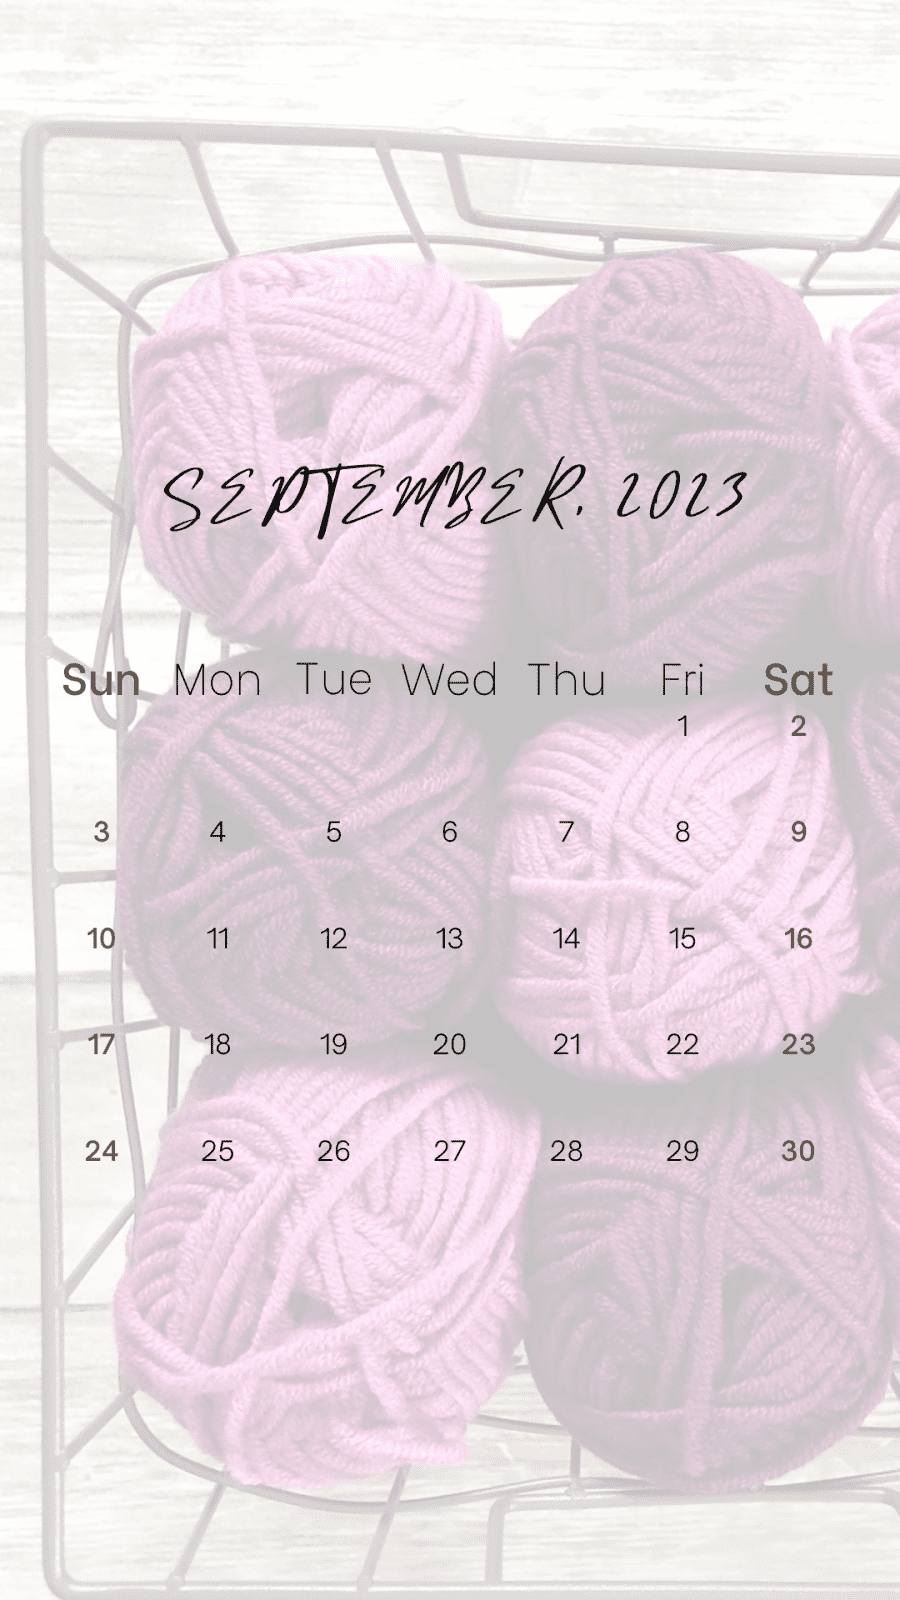 Sept 2023 calendar over pink and purple yarn balls.